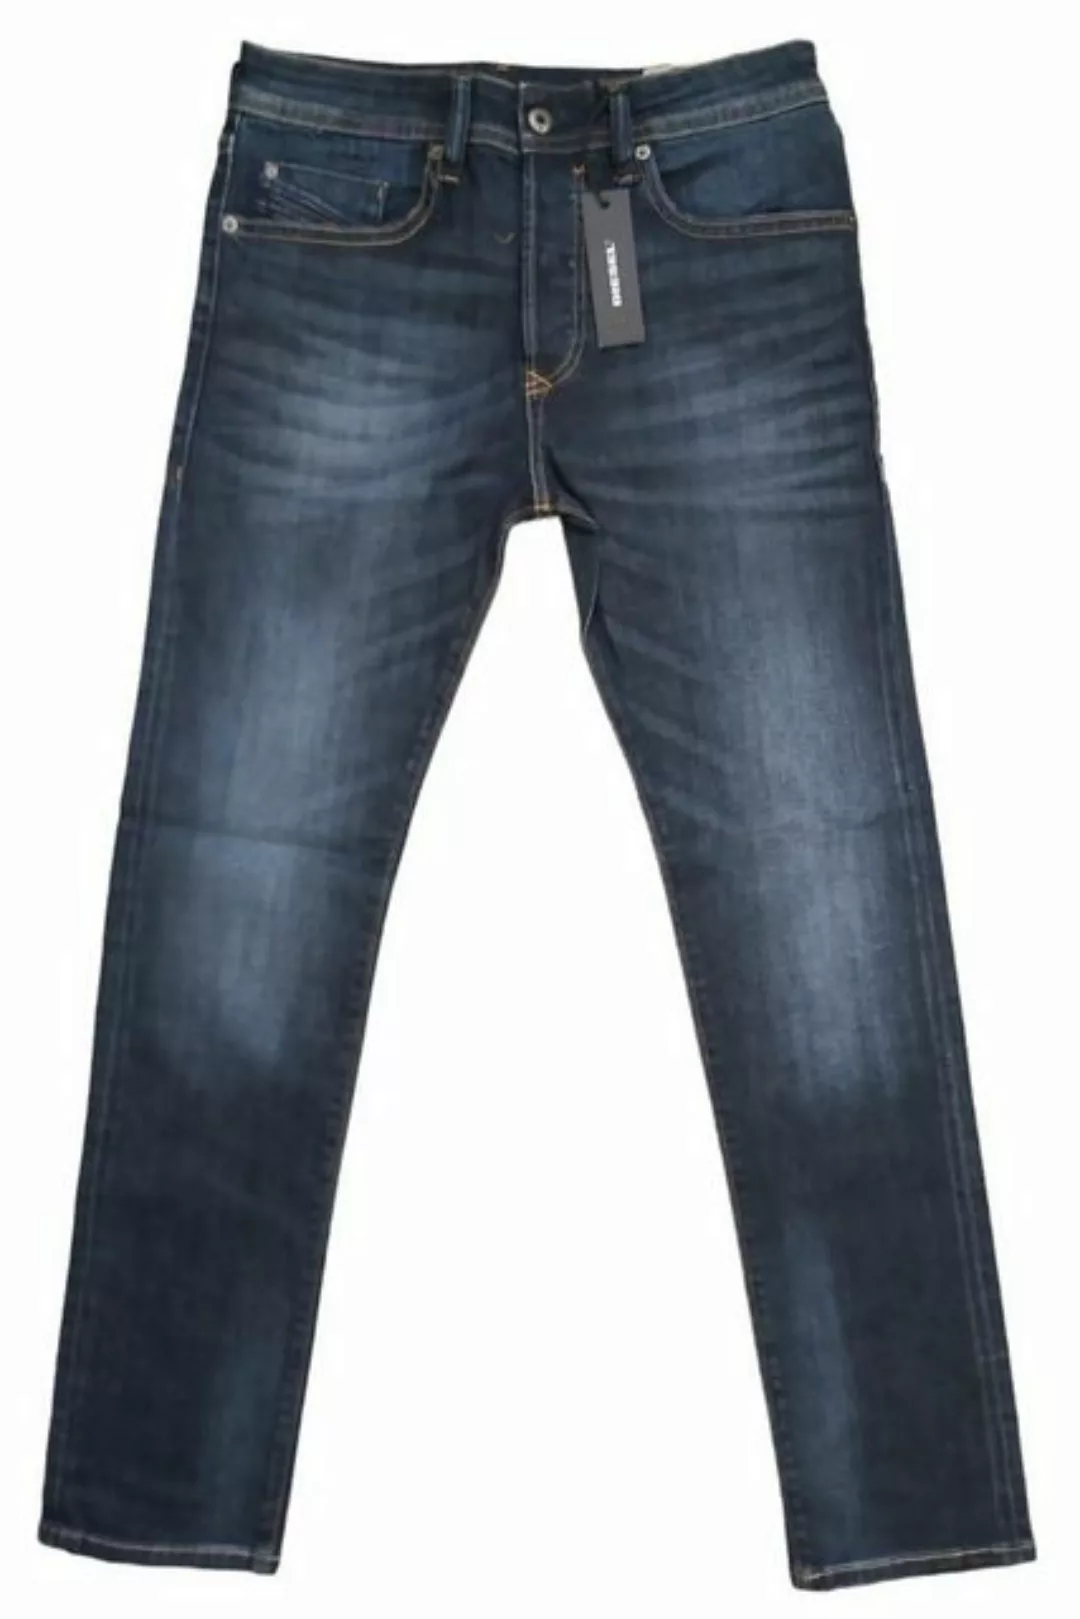 Diesel Comfort-fit-Jeans Buster RFE03 (Dunkelblau, Stretch) 5-Pocket-Style günstig online kaufen